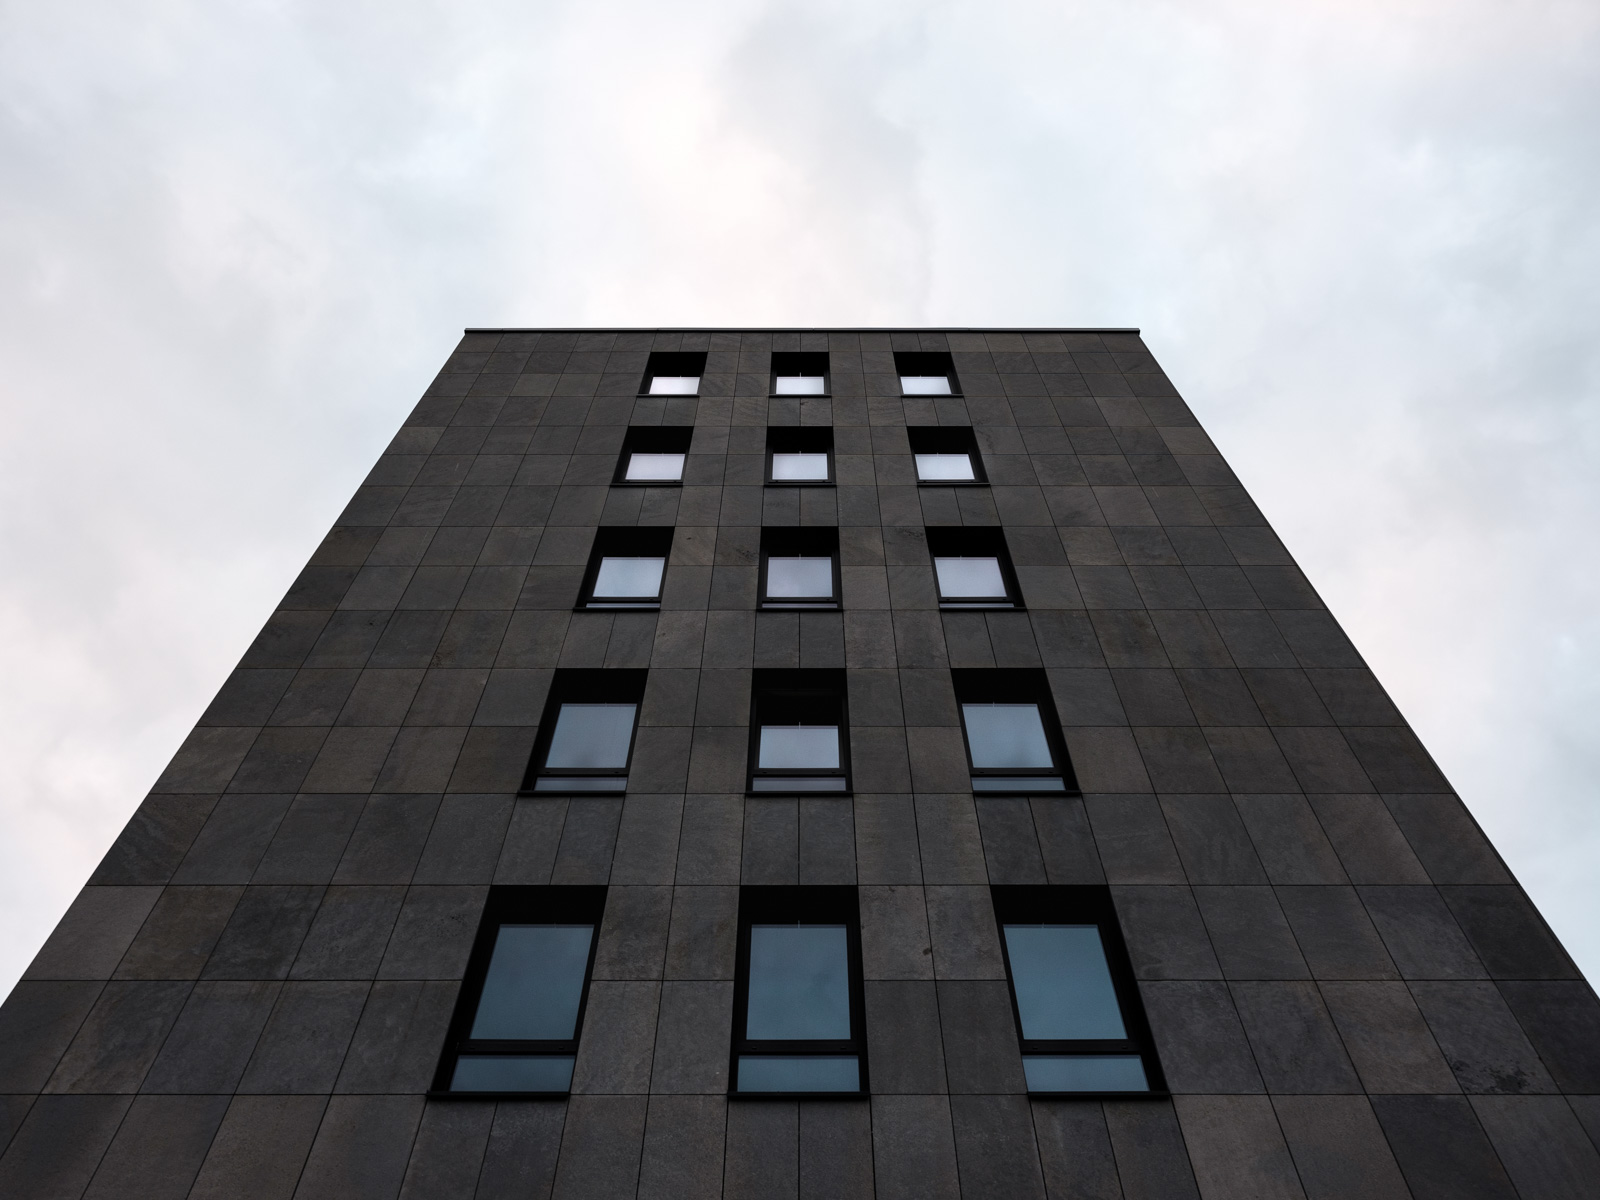 Dark facade. Office building located at  'Herforder Straße 73' in July 2020 (Bielefeld, Germany).